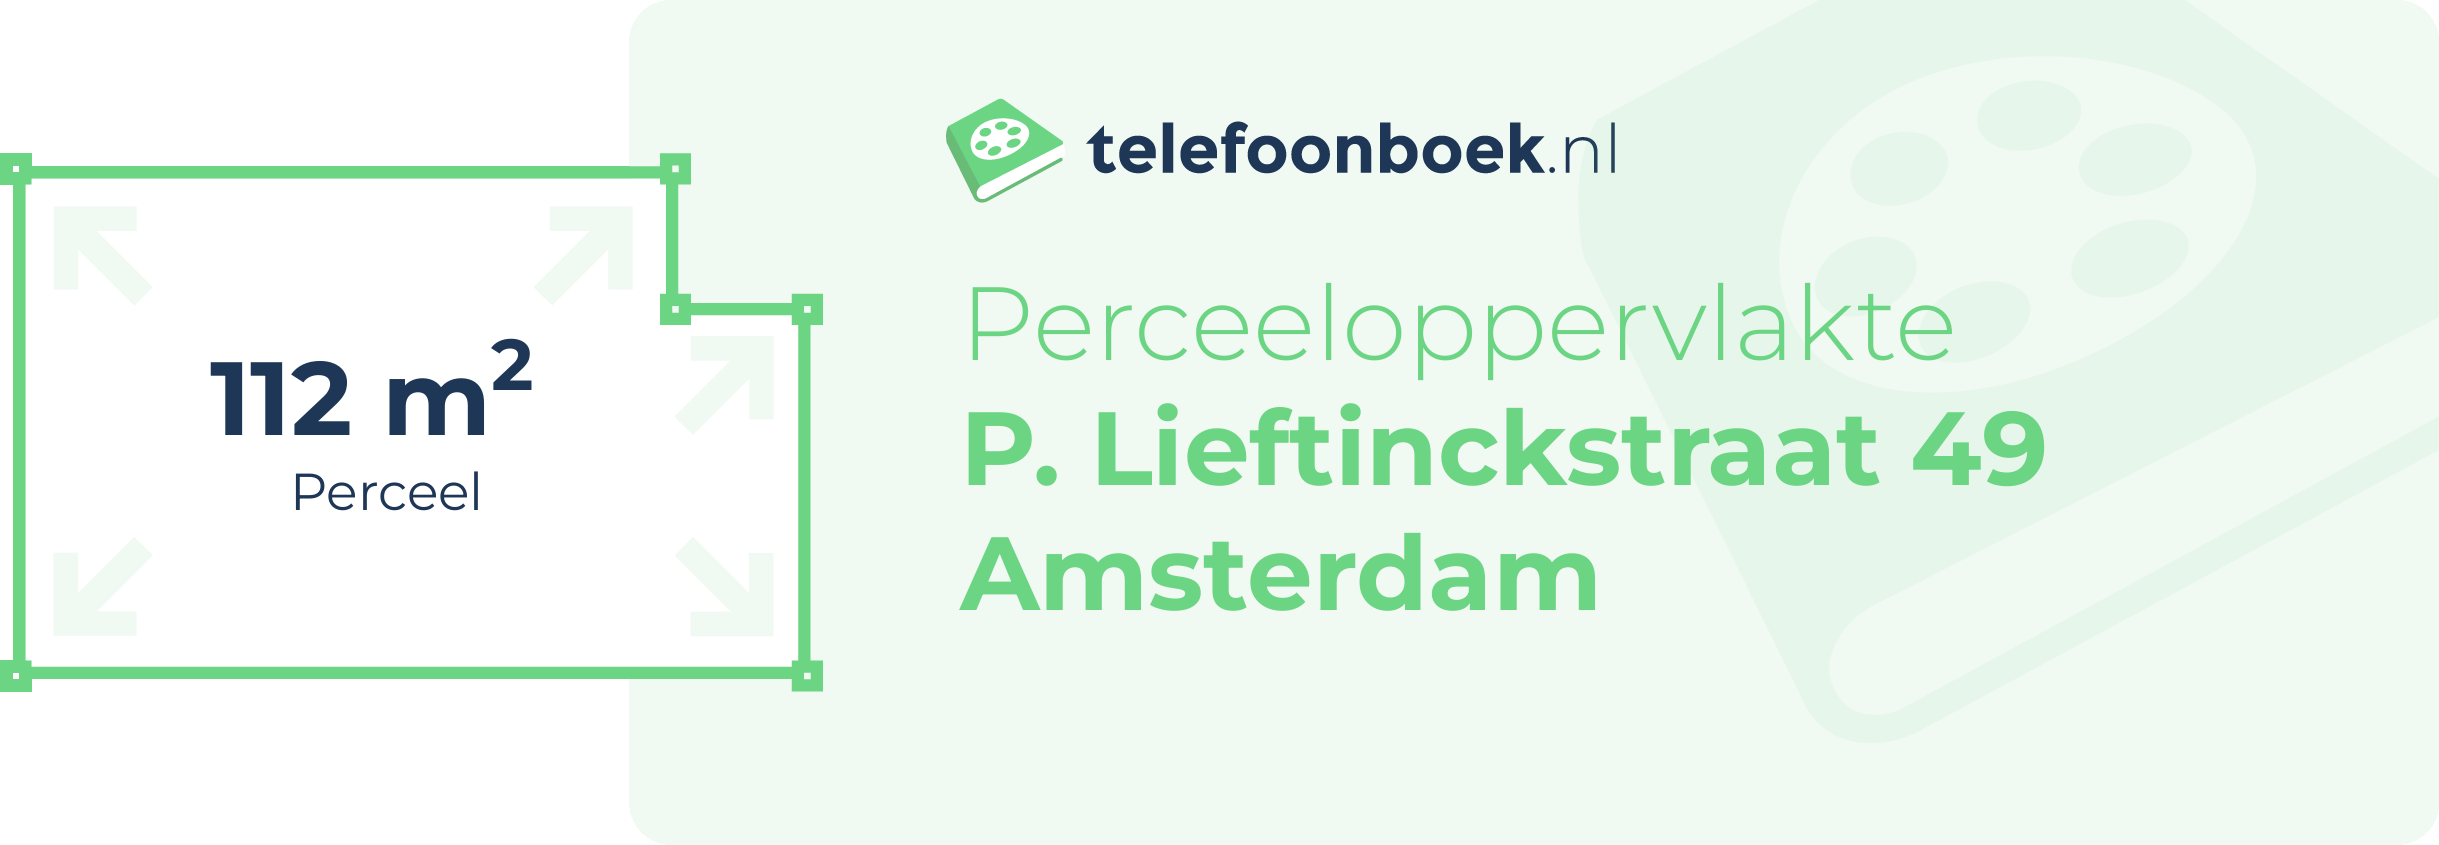 Perceeloppervlakte P. Lieftinckstraat 49 Amsterdam